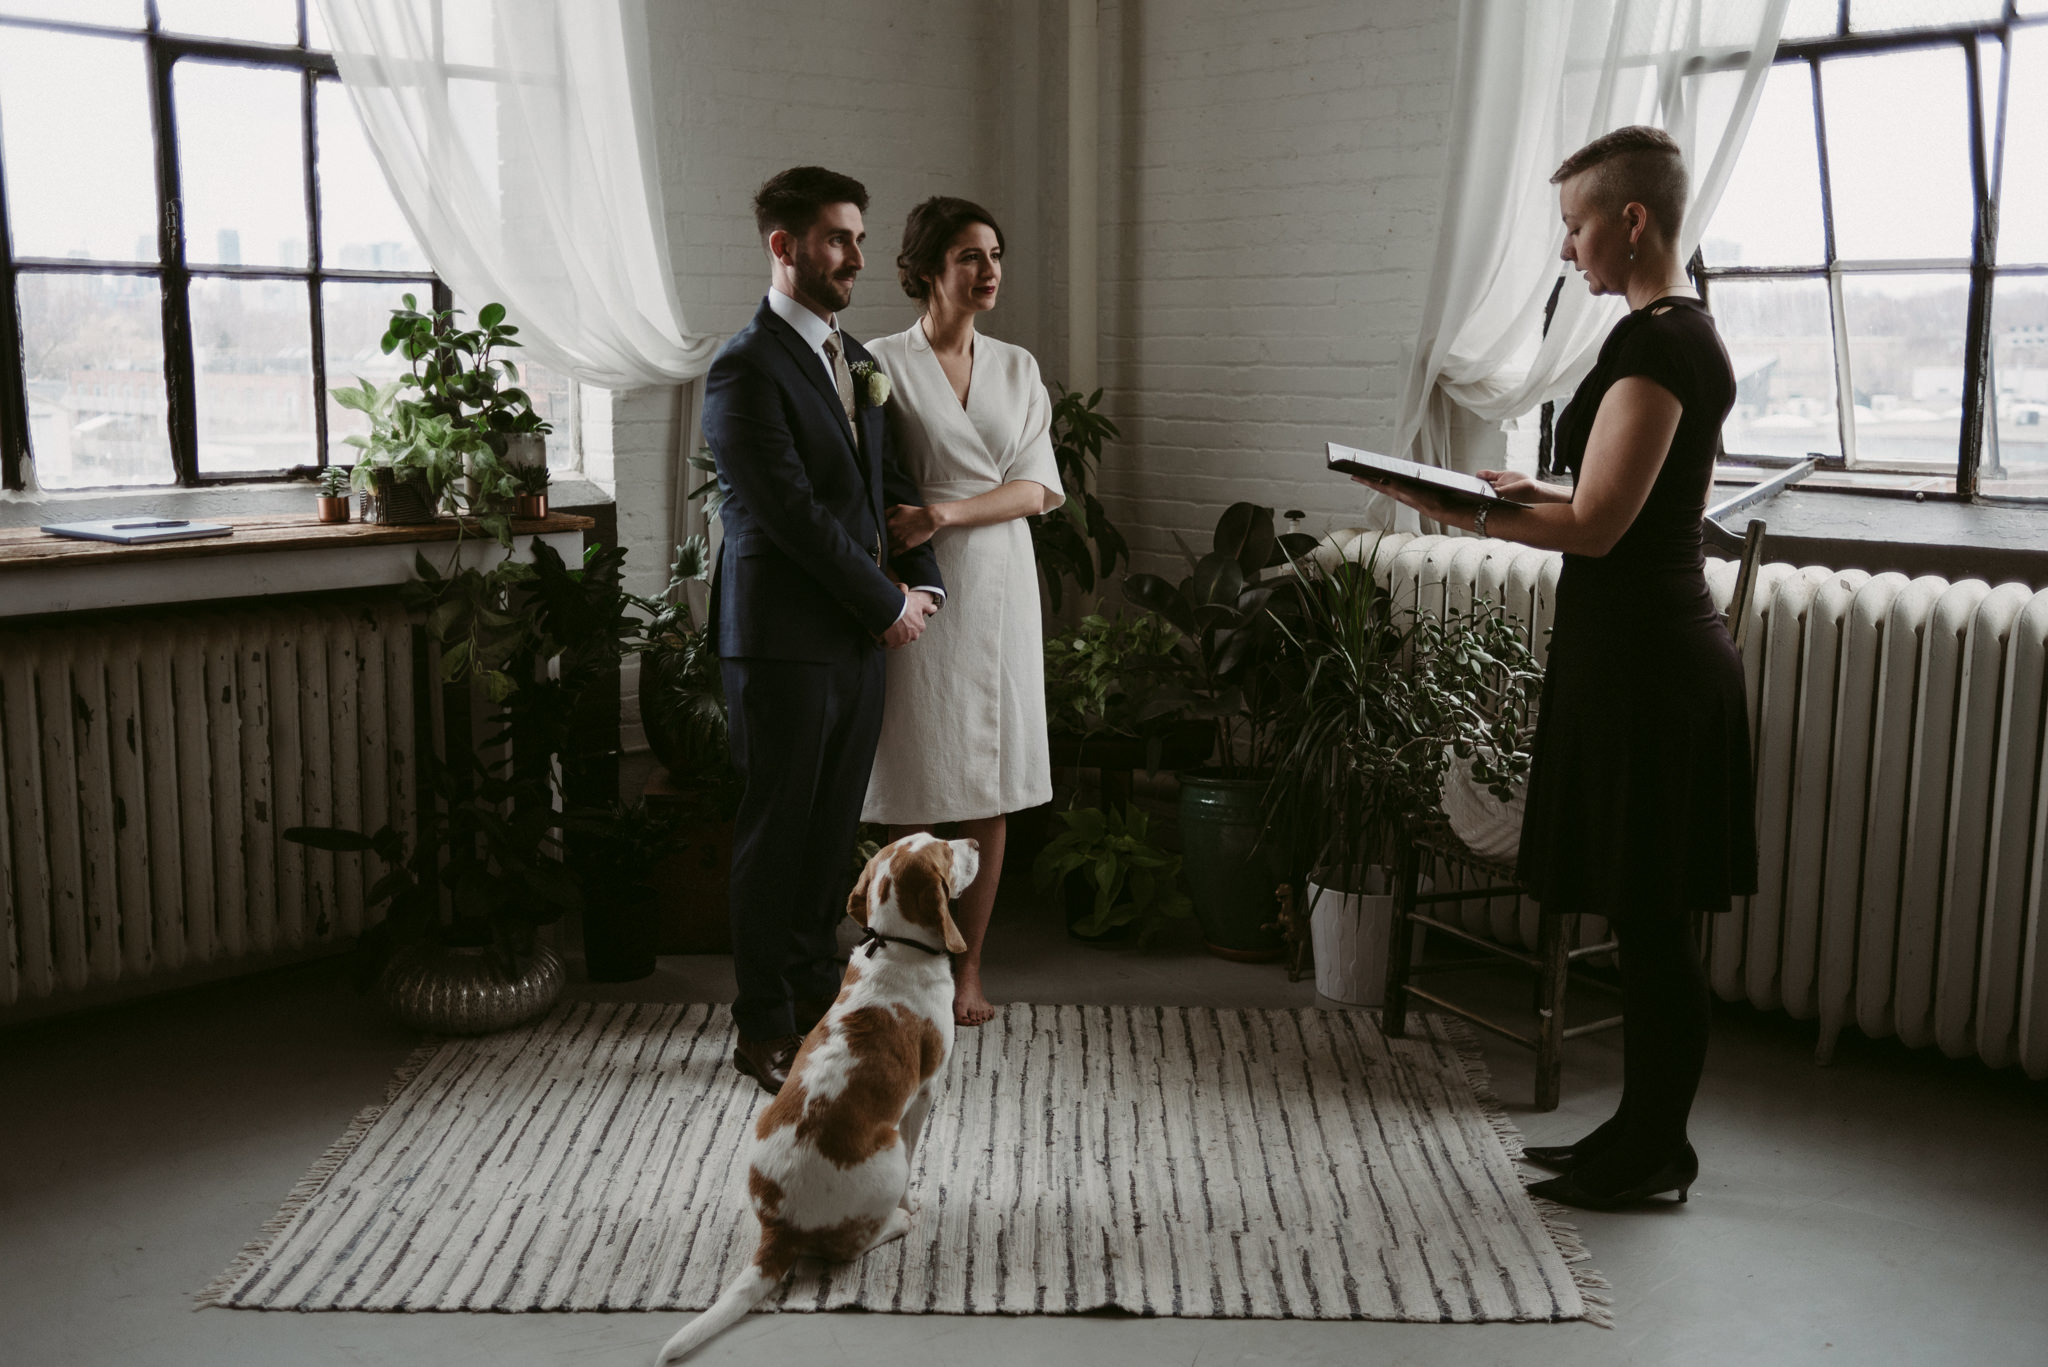 Dog watching during wedding ceremony in trendy Toronto loft